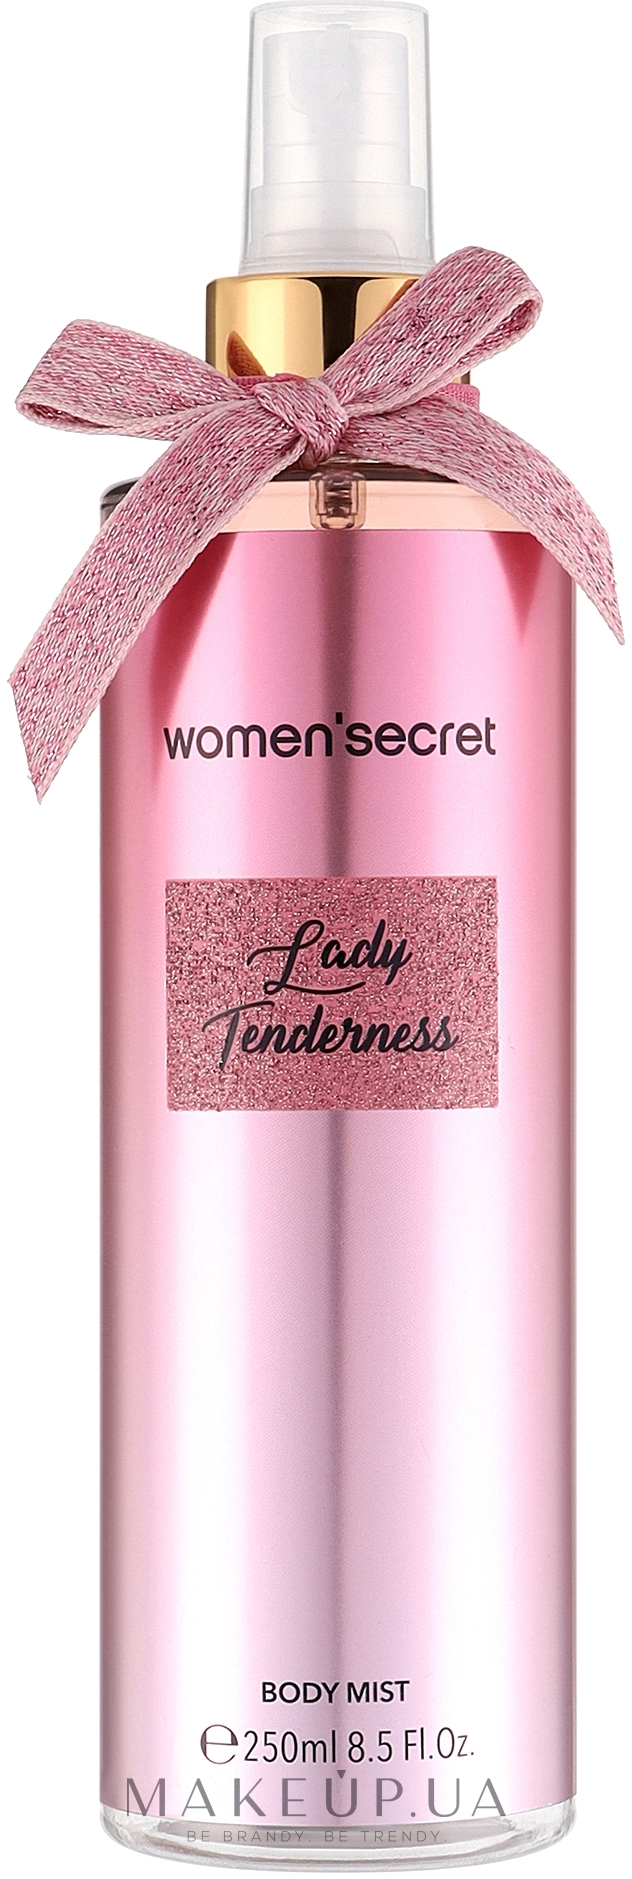 Women'Secret Lady Tenderness - Мист для тела — фото 250ml